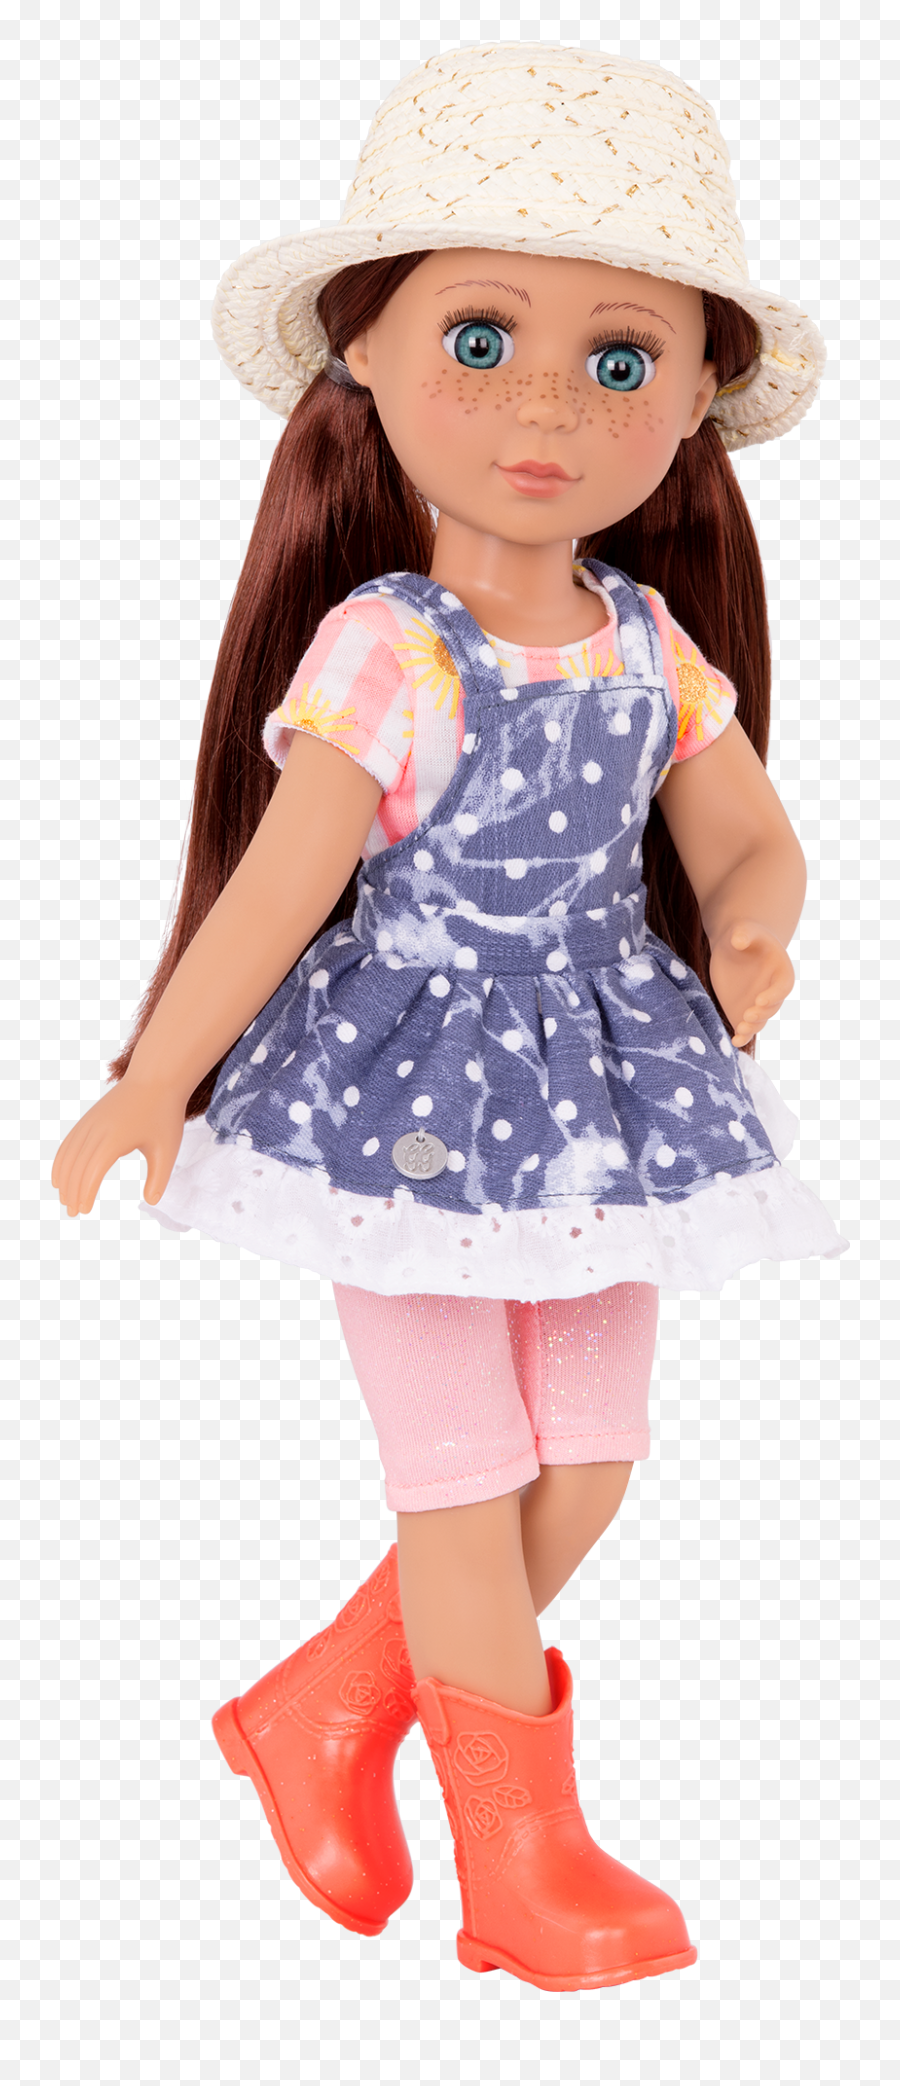 Hallie - Girly Emoji,Lifelike Doll Showing Emotions